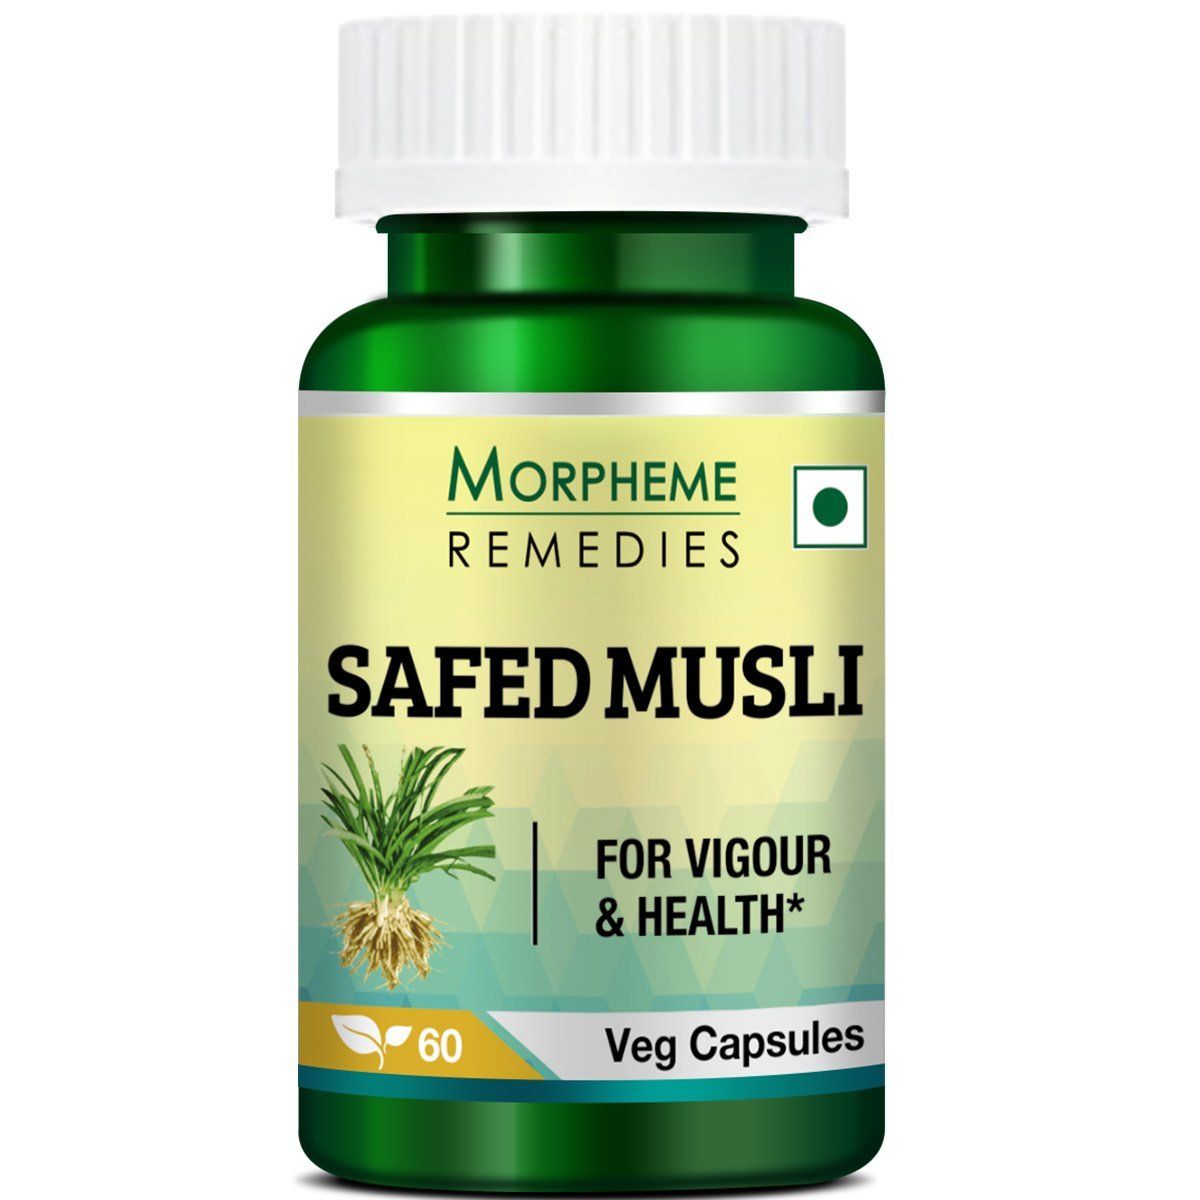 Morpheme Remedies Safed Musli Image